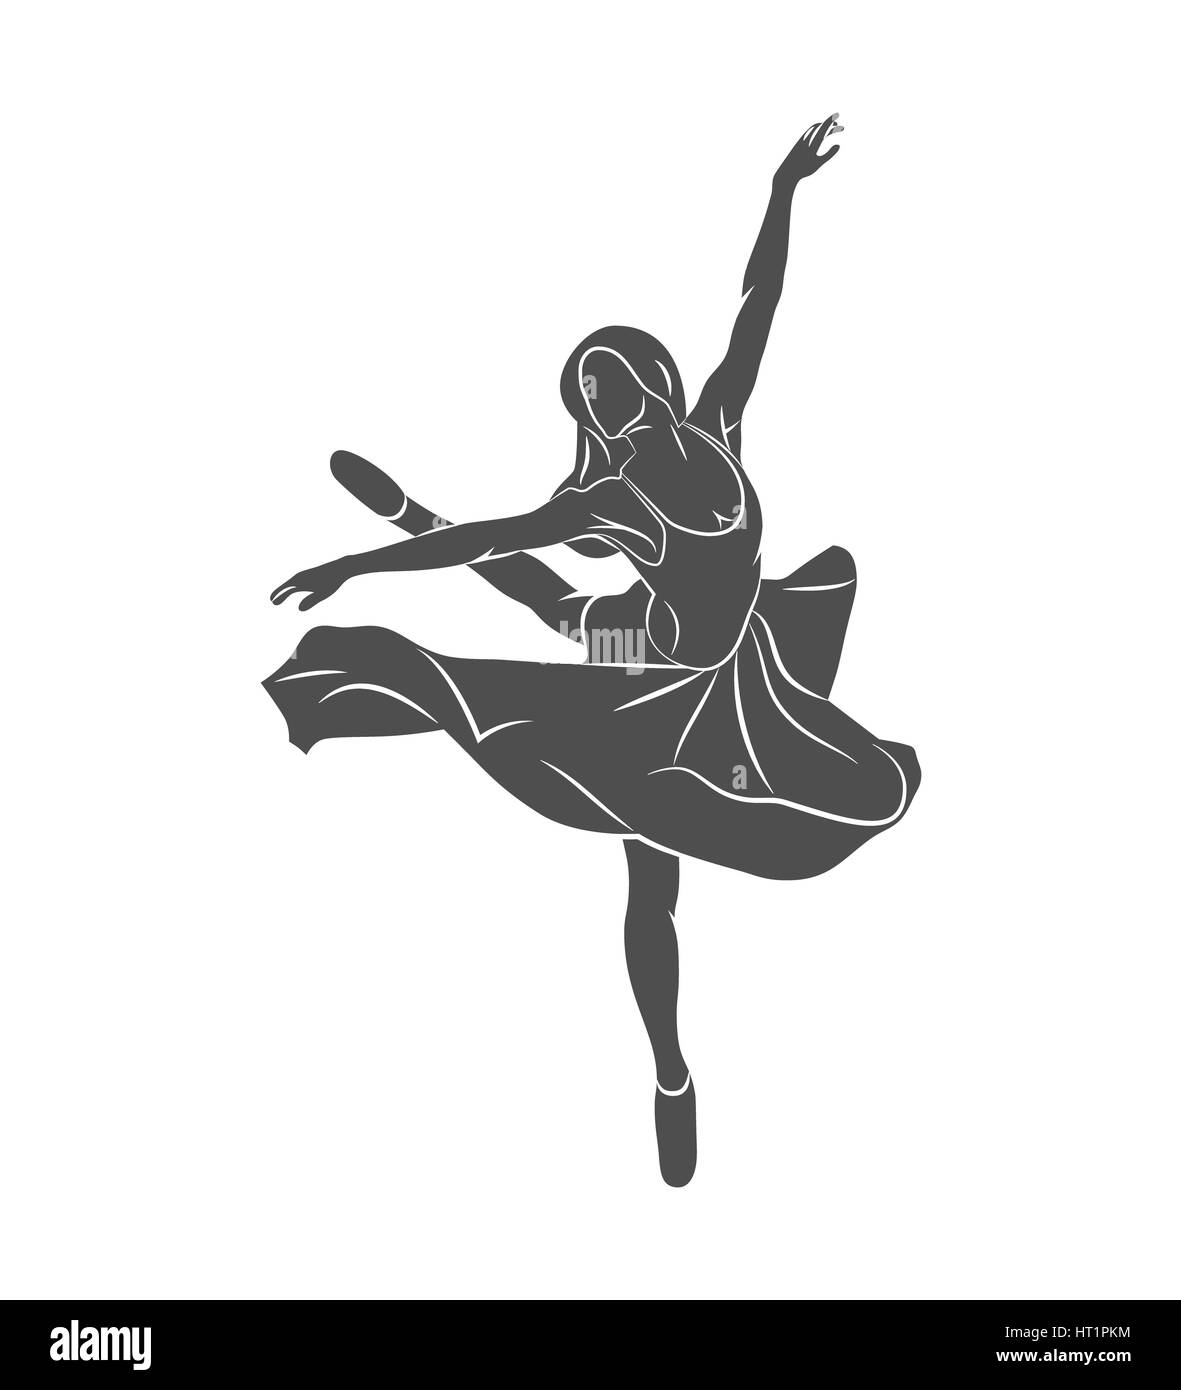 Ballet Dancers Silhouette